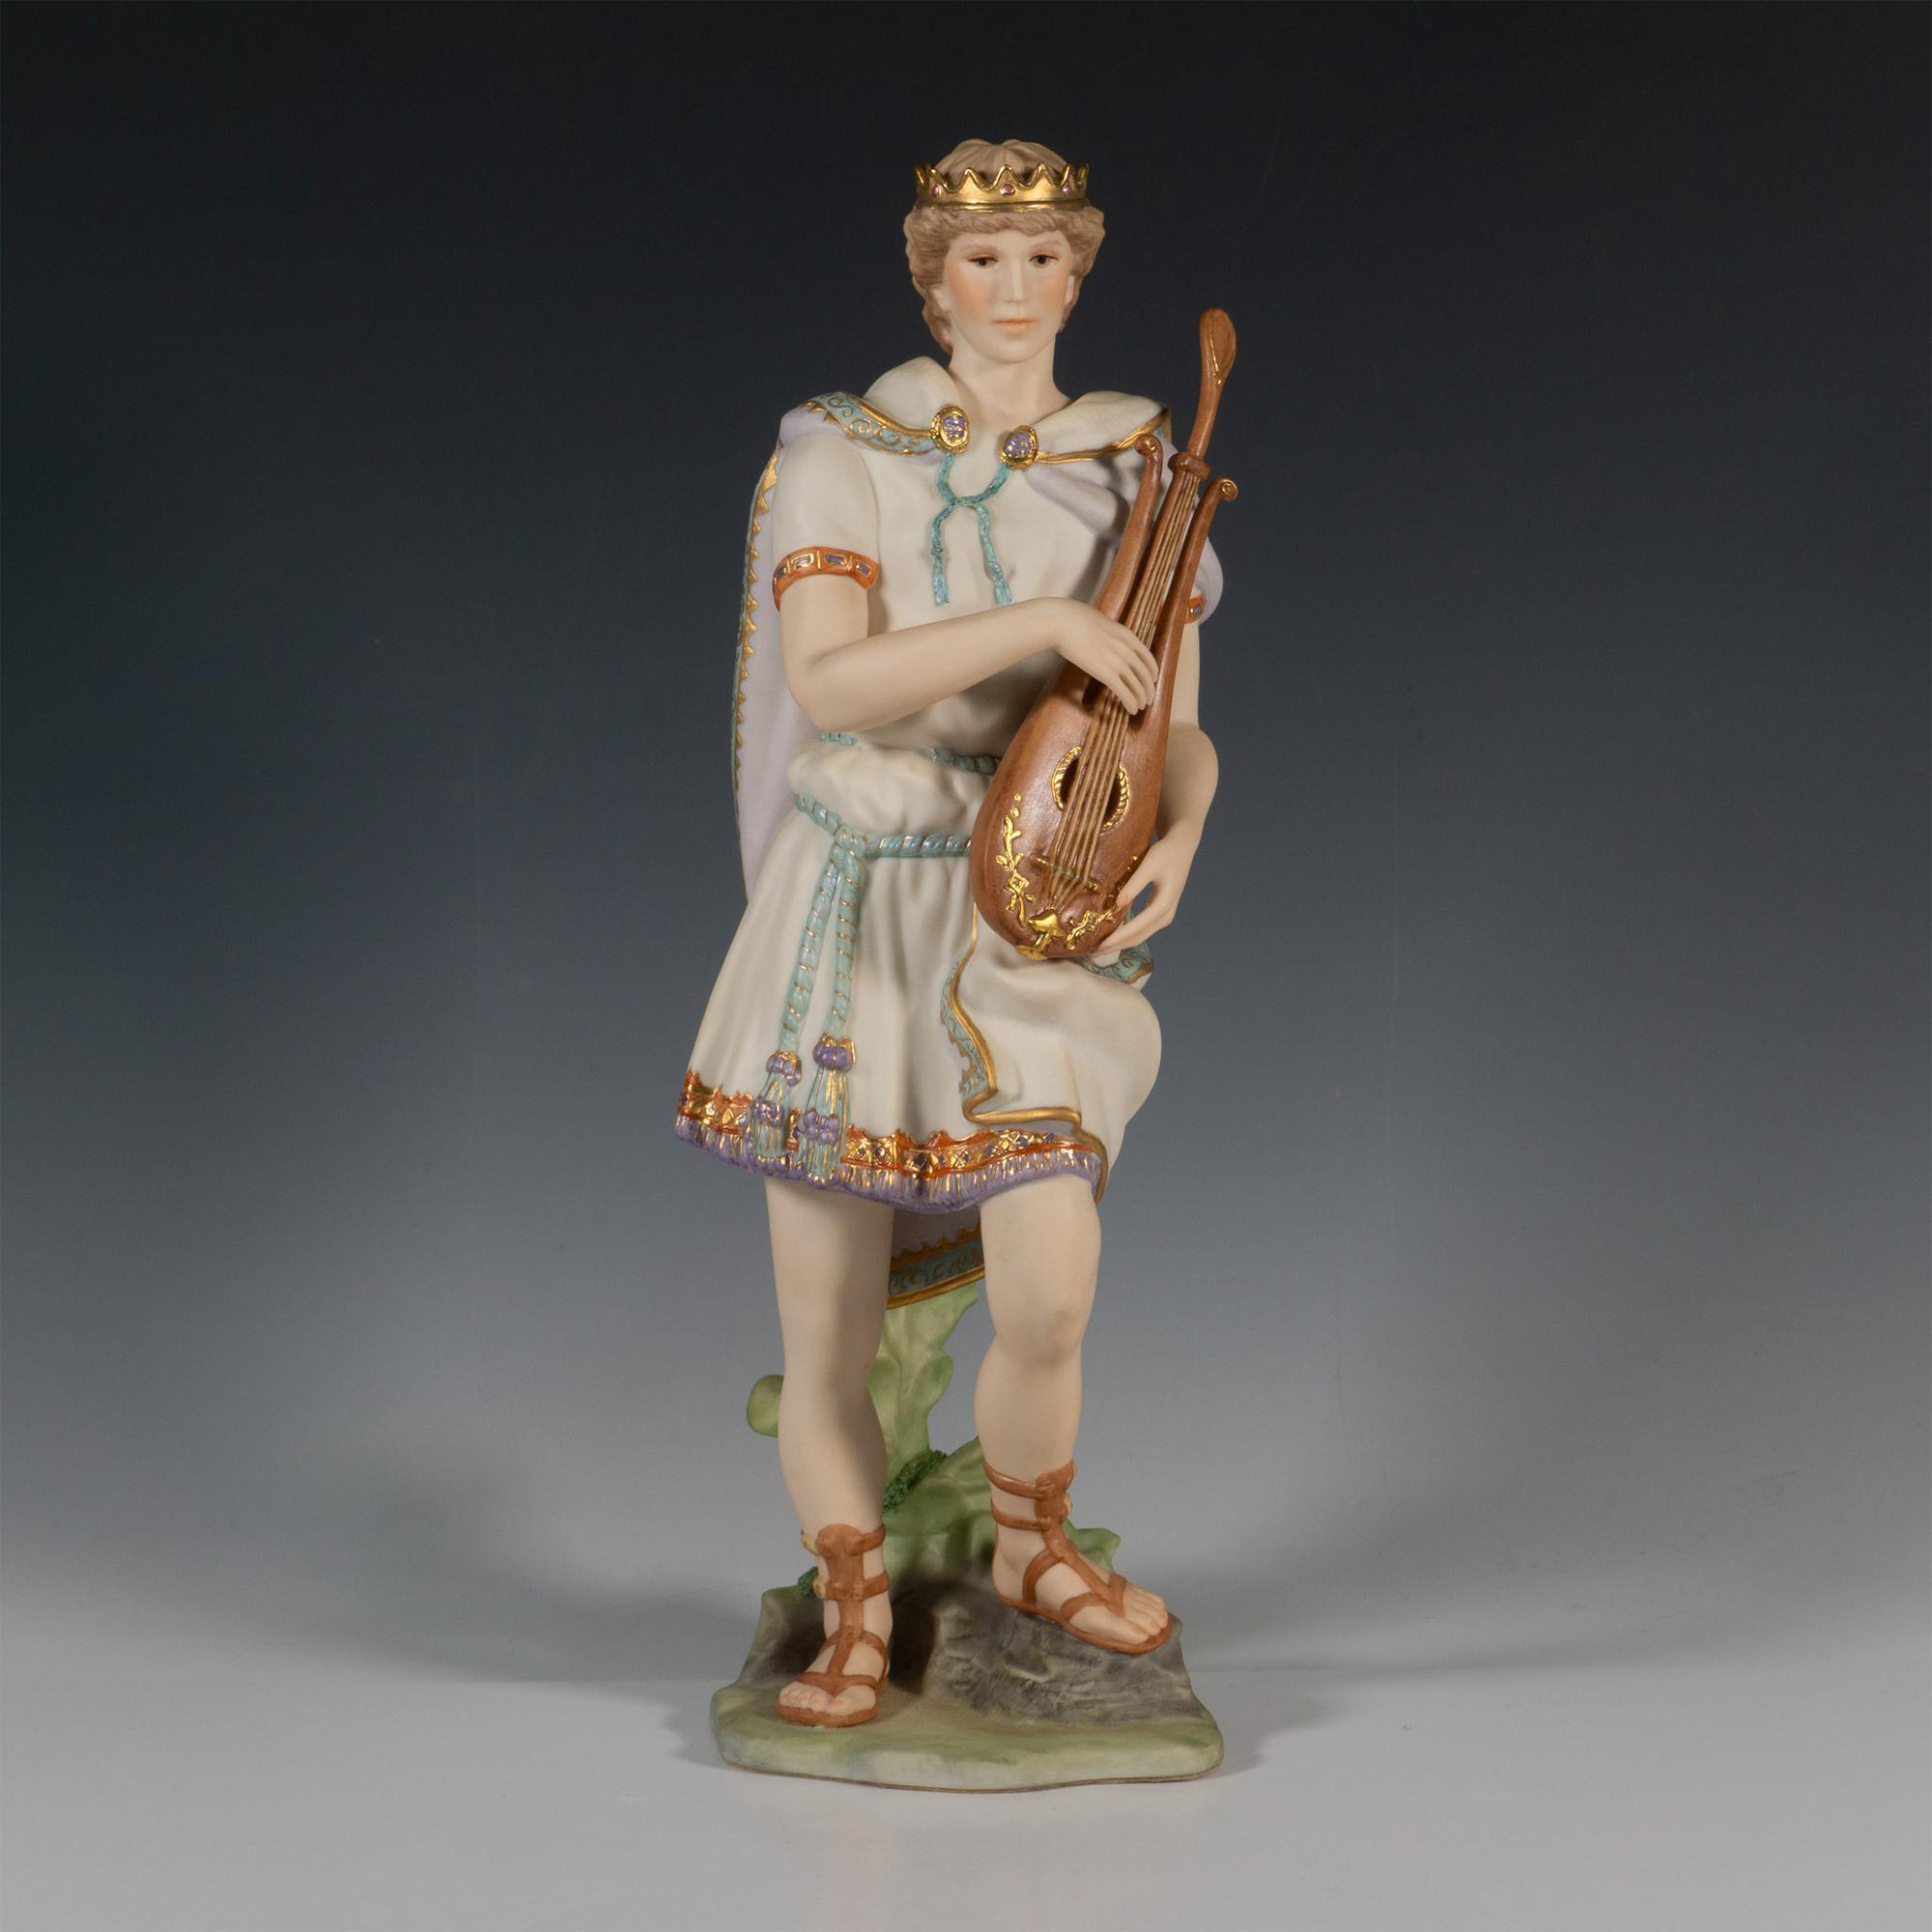 Cybis Limited Edition Figurine, King David